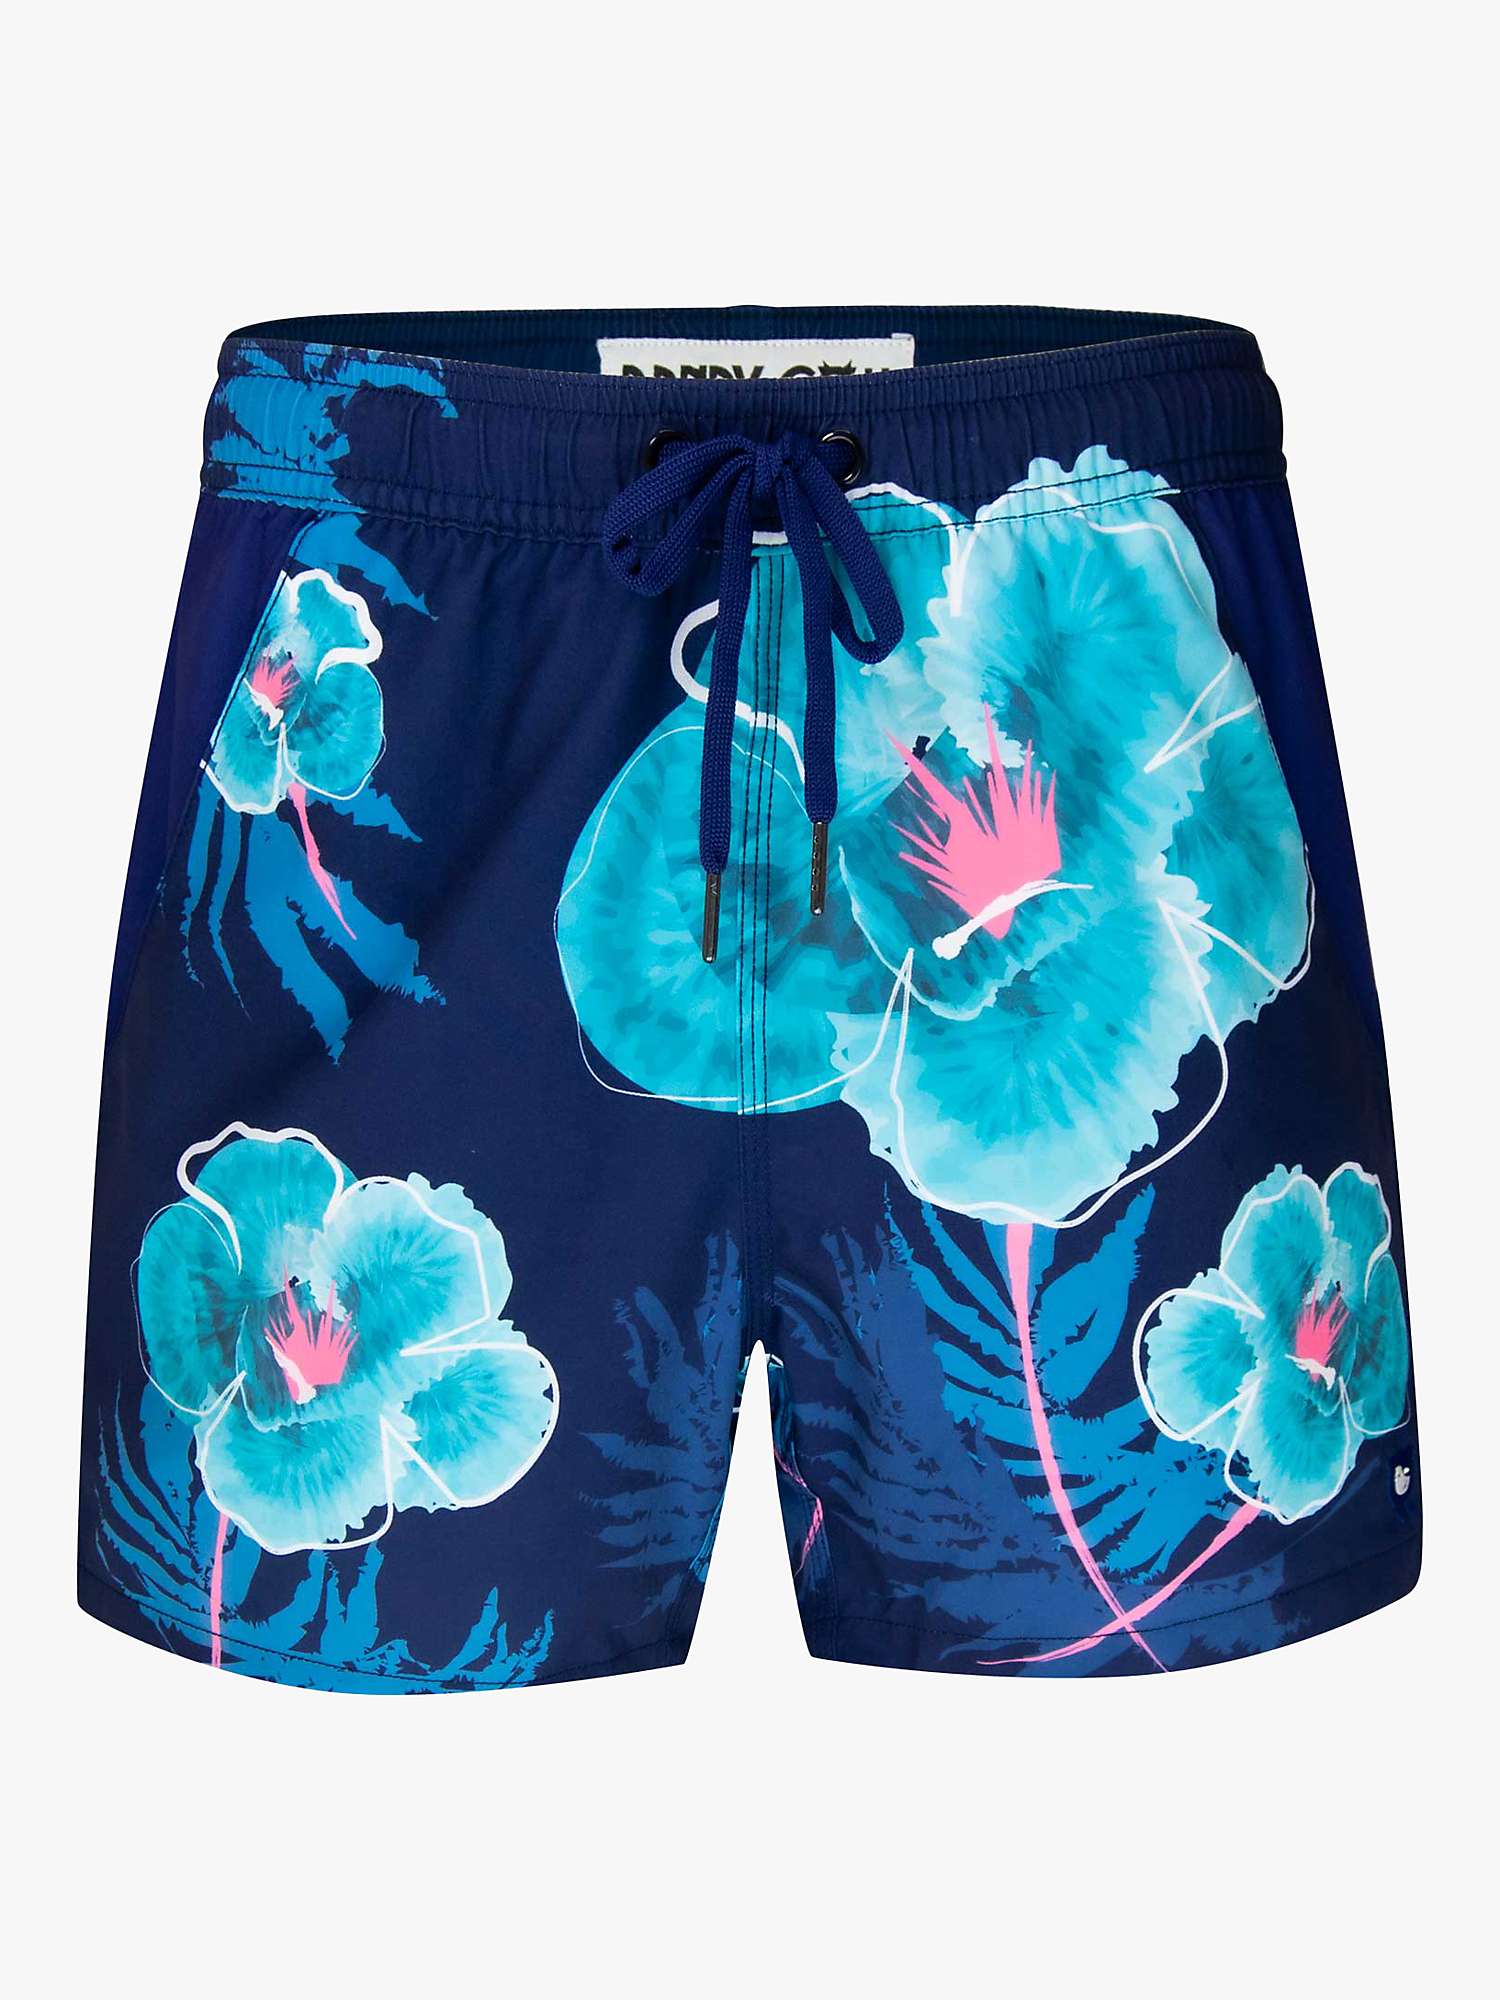 Buy Randy Cow Floral Print Swim Shorts, Navy/Multi Online at johnlewis.com